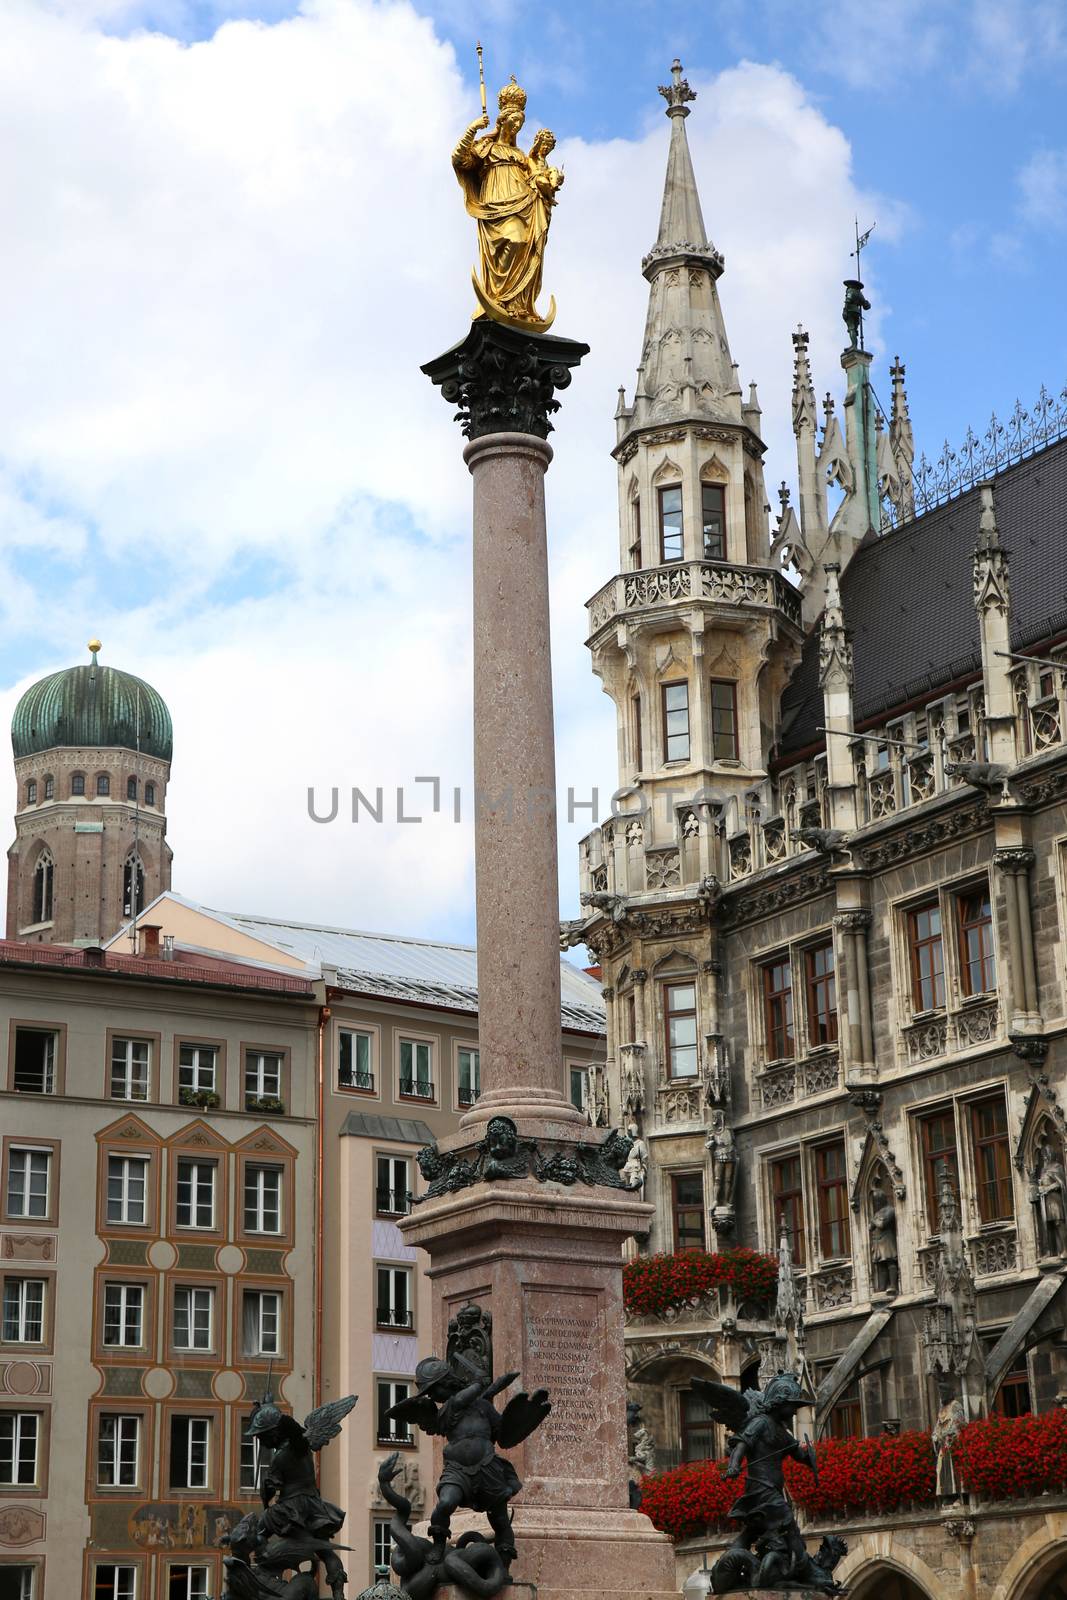 The Golden statue of Mary (Mariensaule), a Marian column on the Marienplatz in Munich, German